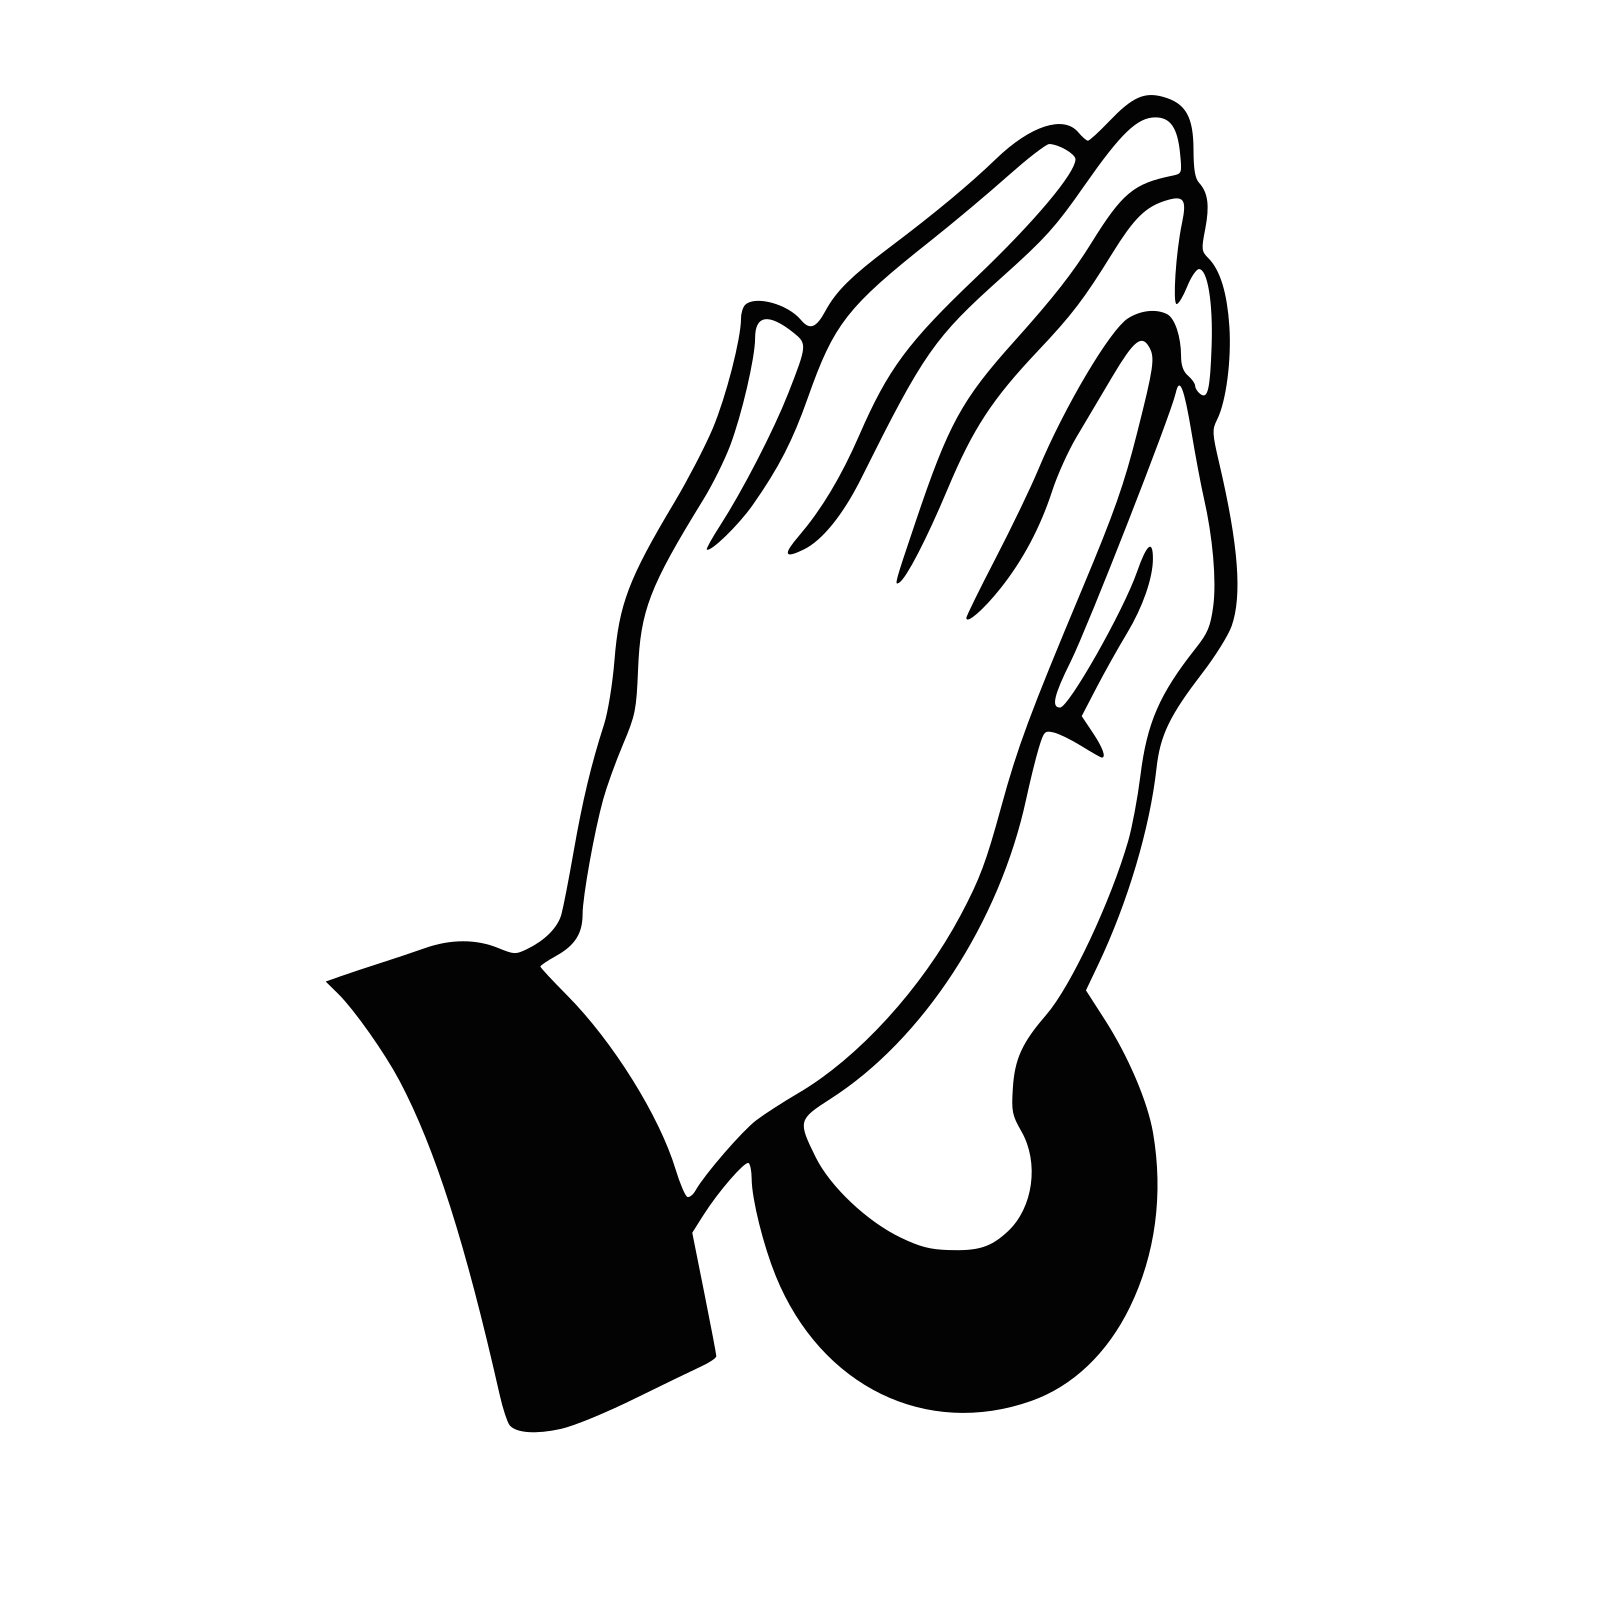 Hands Praying Clipart Transparent Image